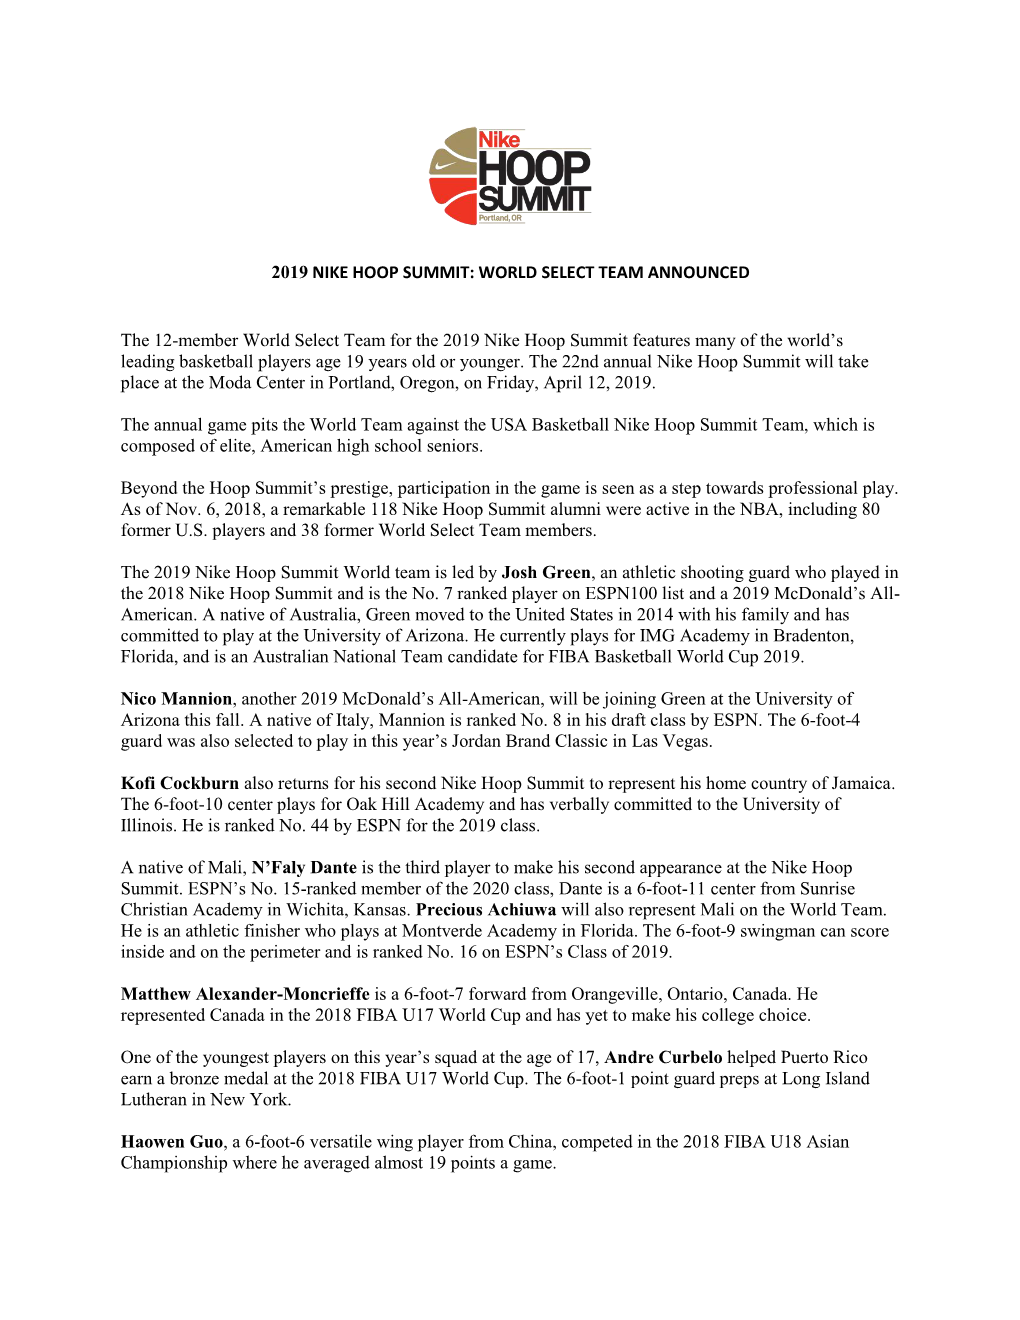 2019 Nike Hoop Summit: World Select Team Announced